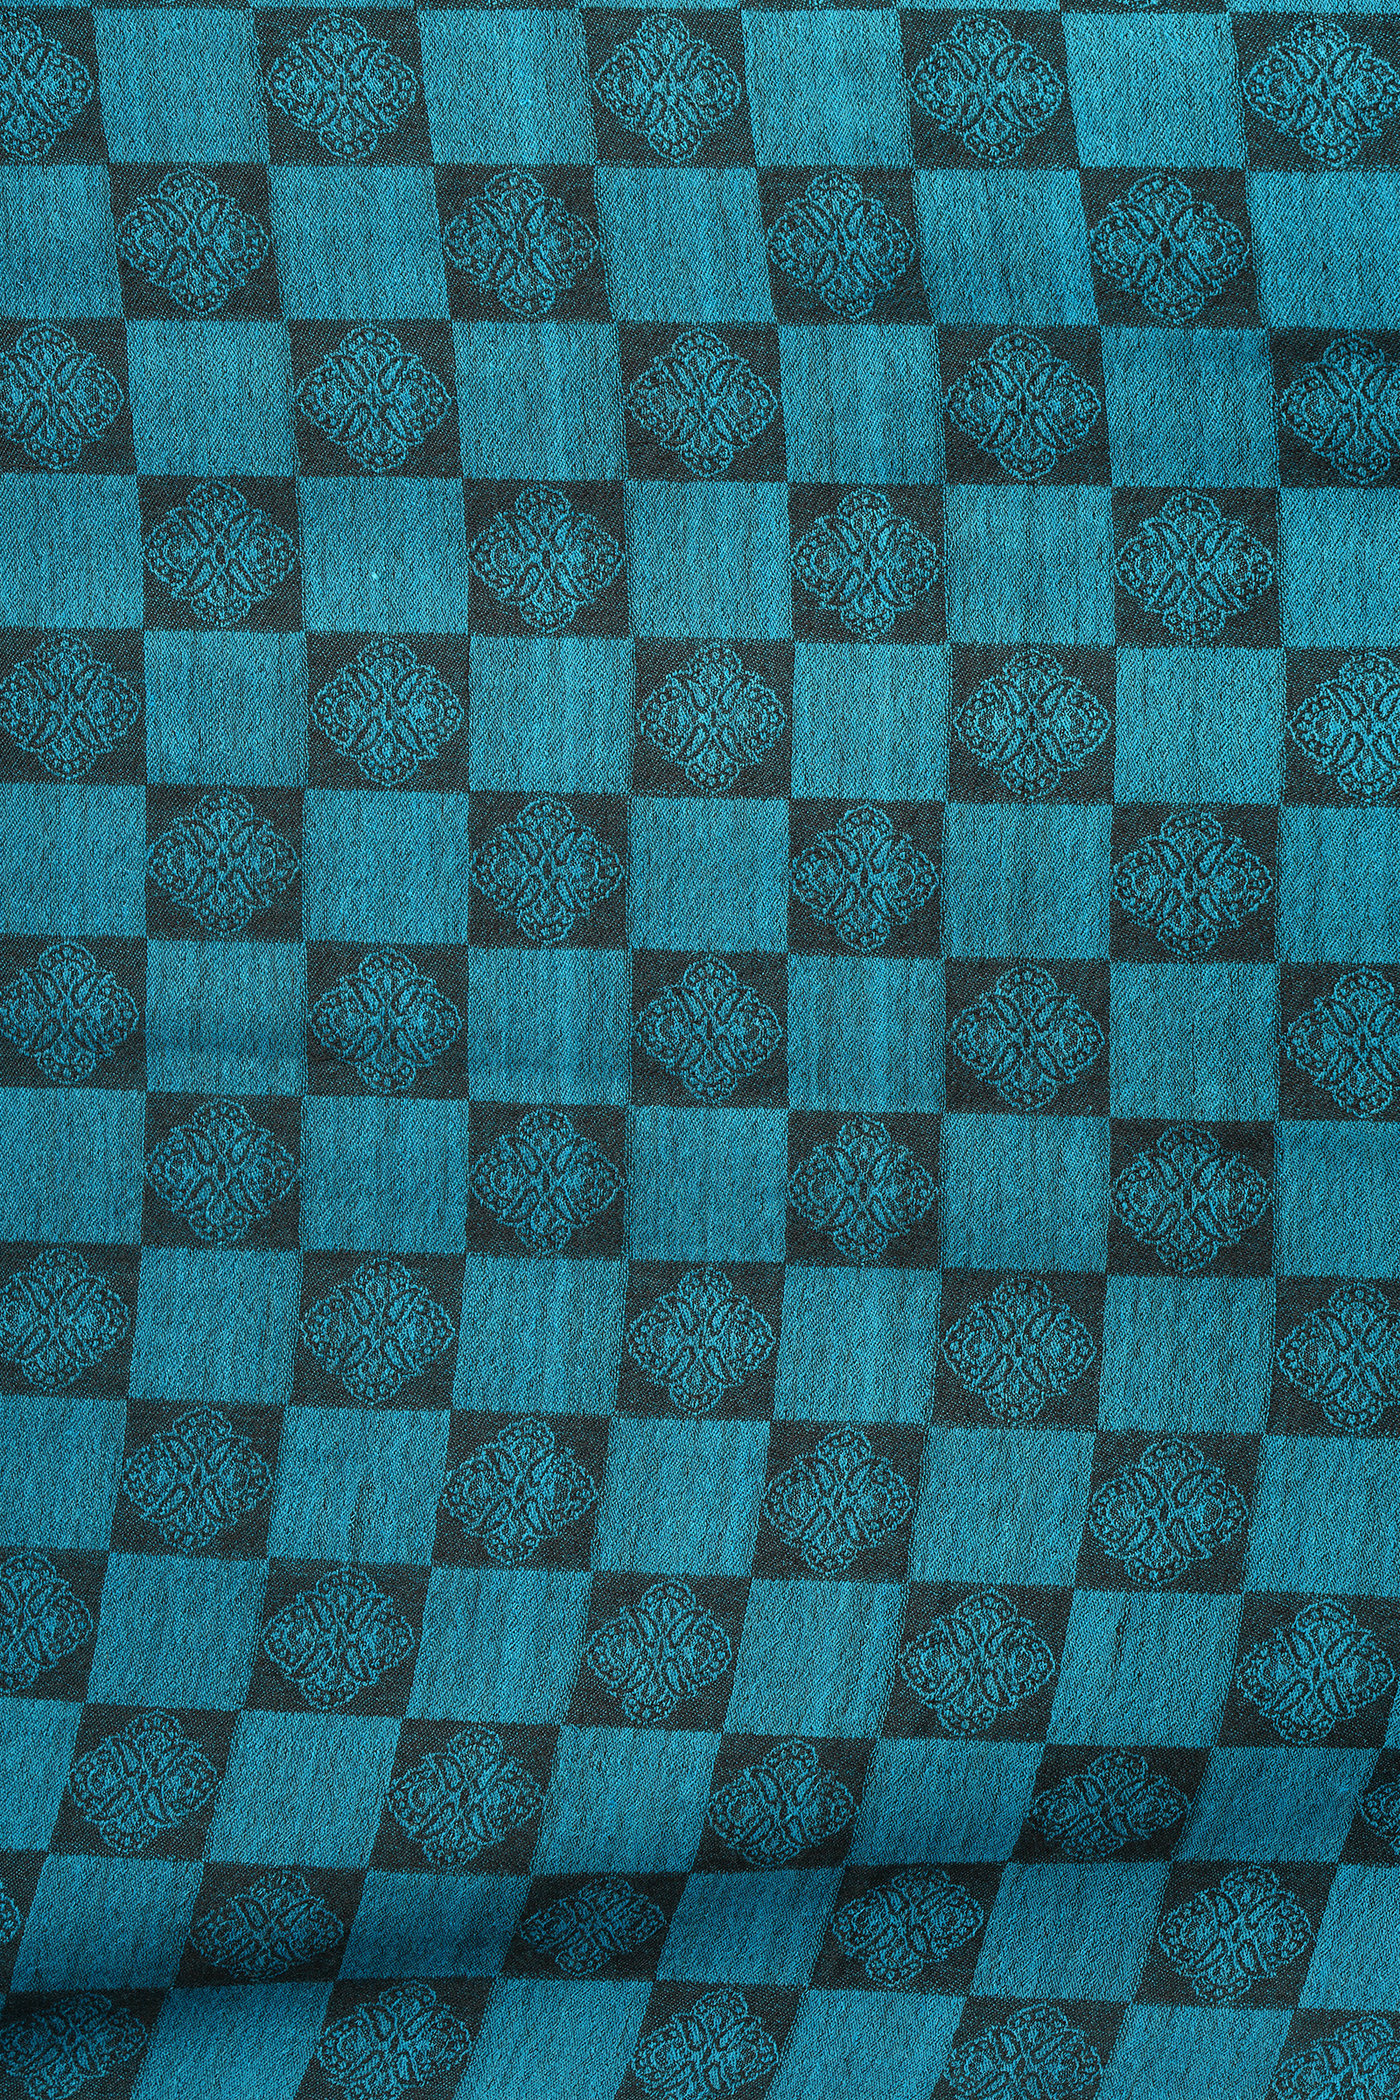 Cashmere Fine Wool, Checkered Design